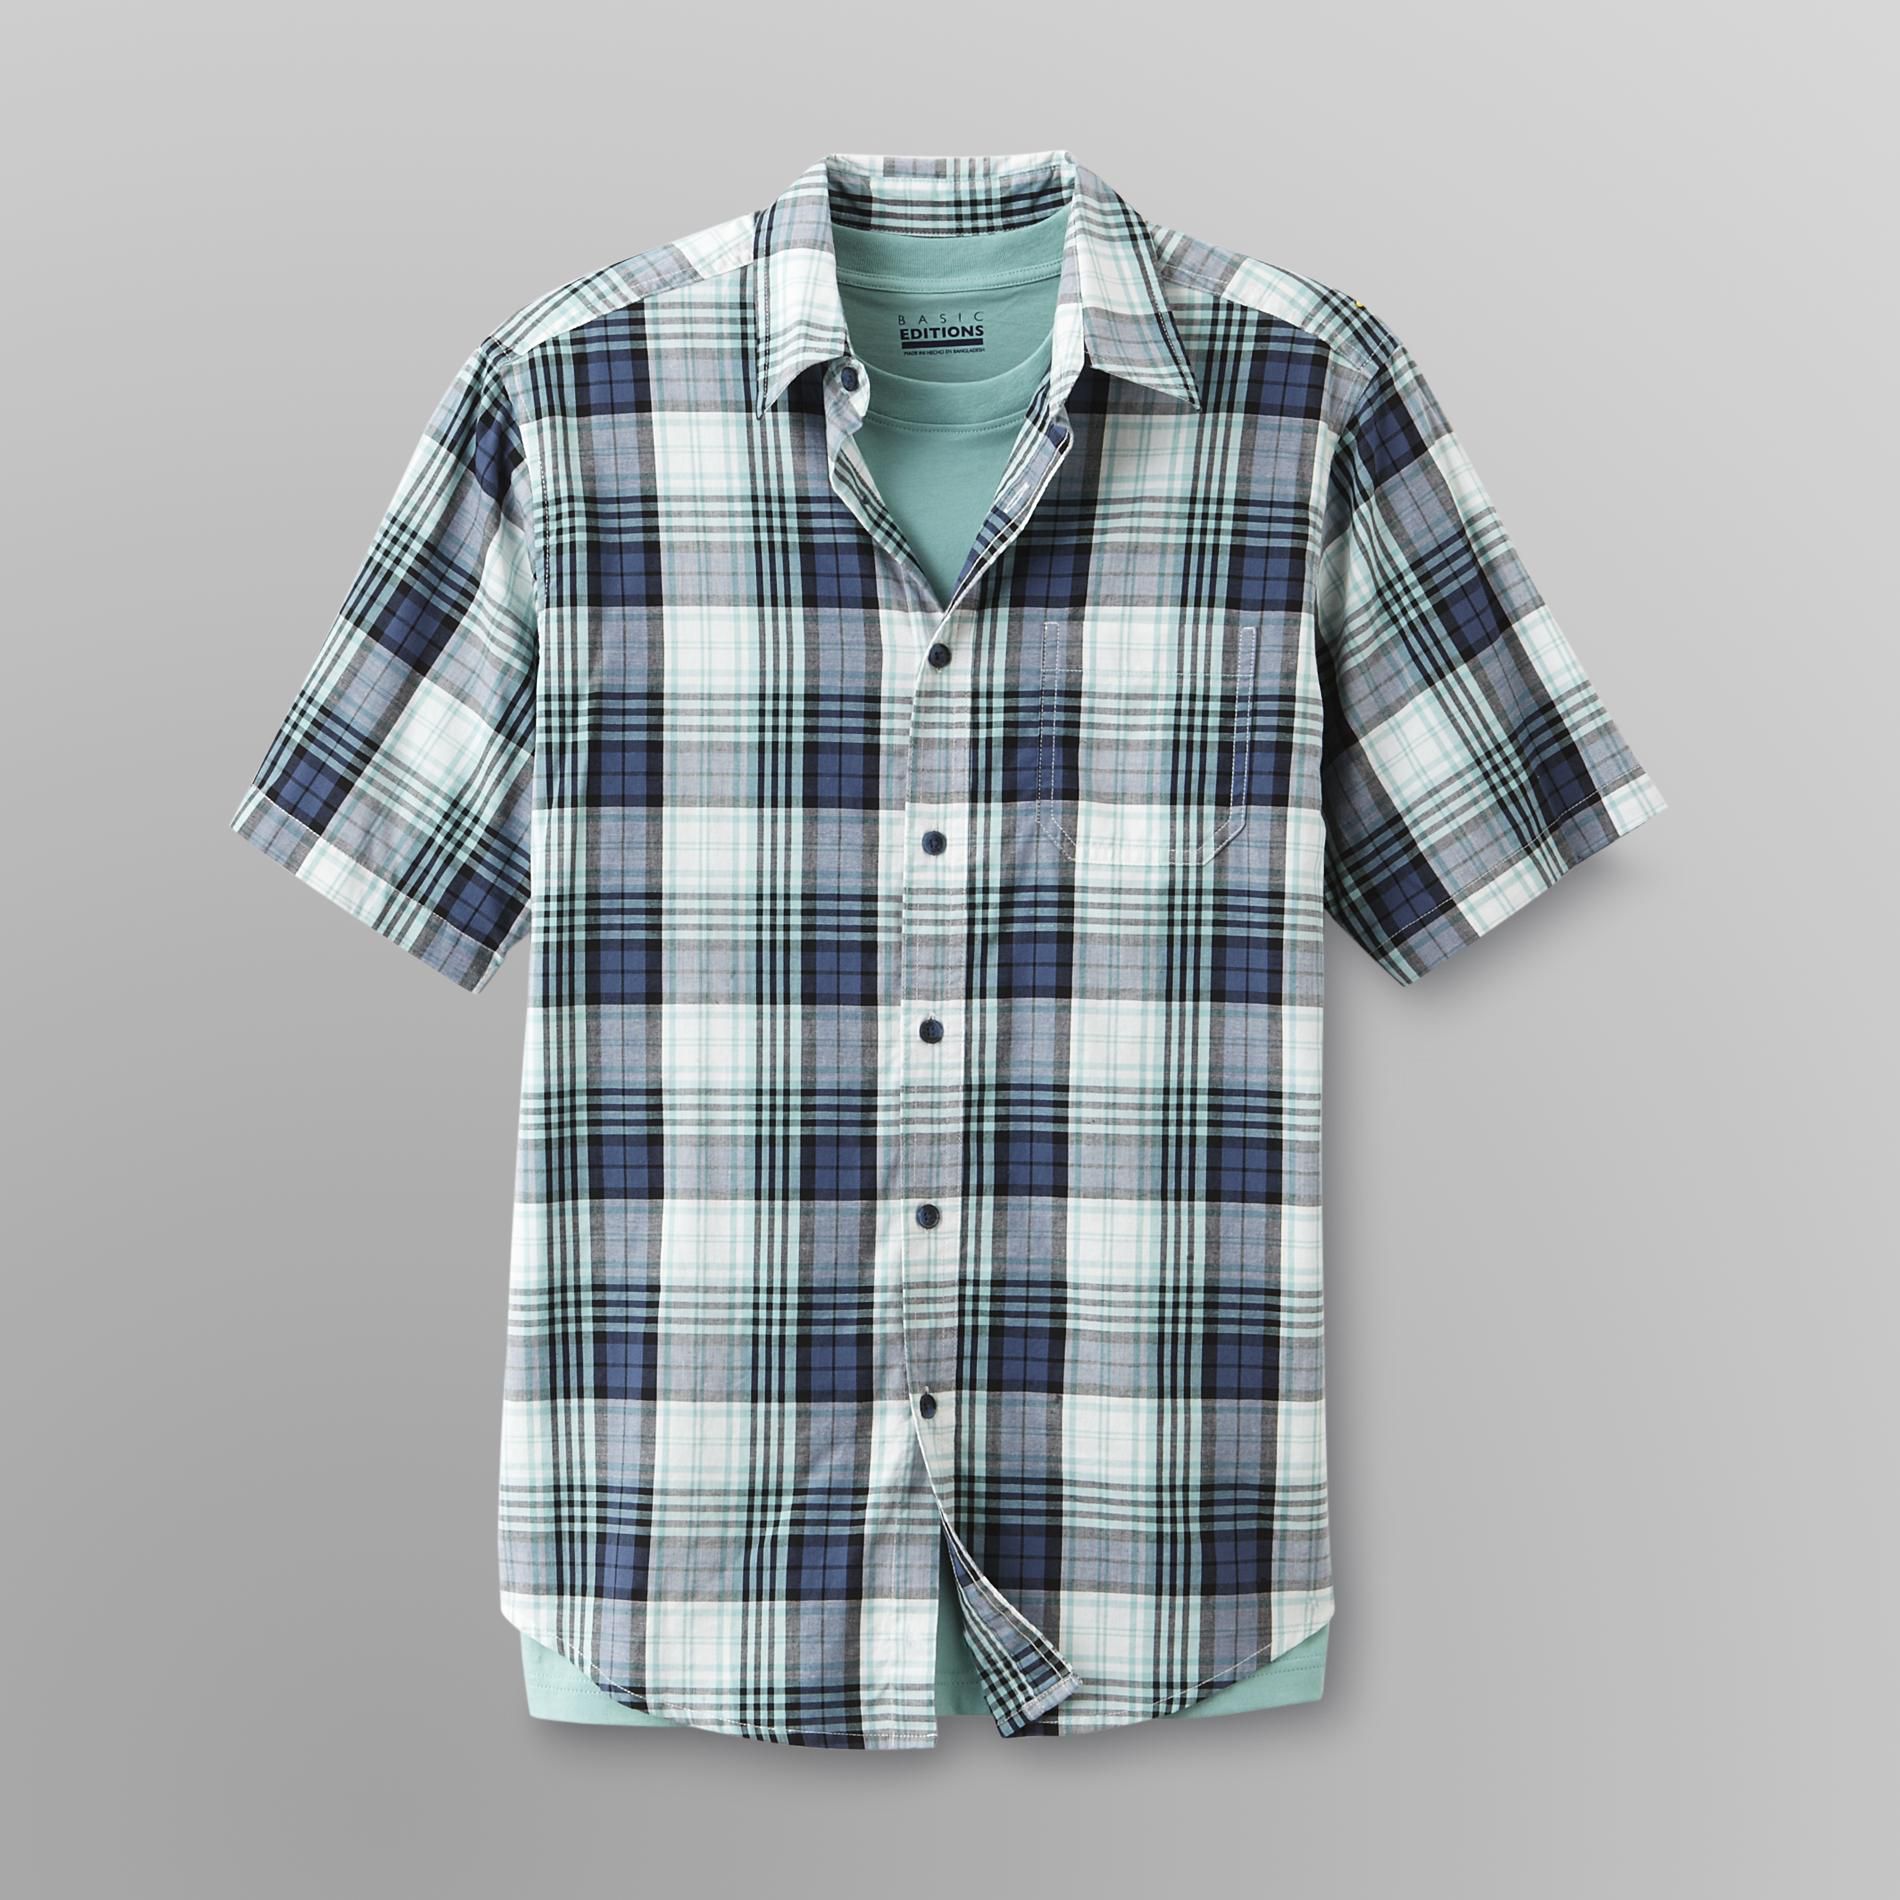 Basic Editions Men's Layered Shirt & T-Shirt